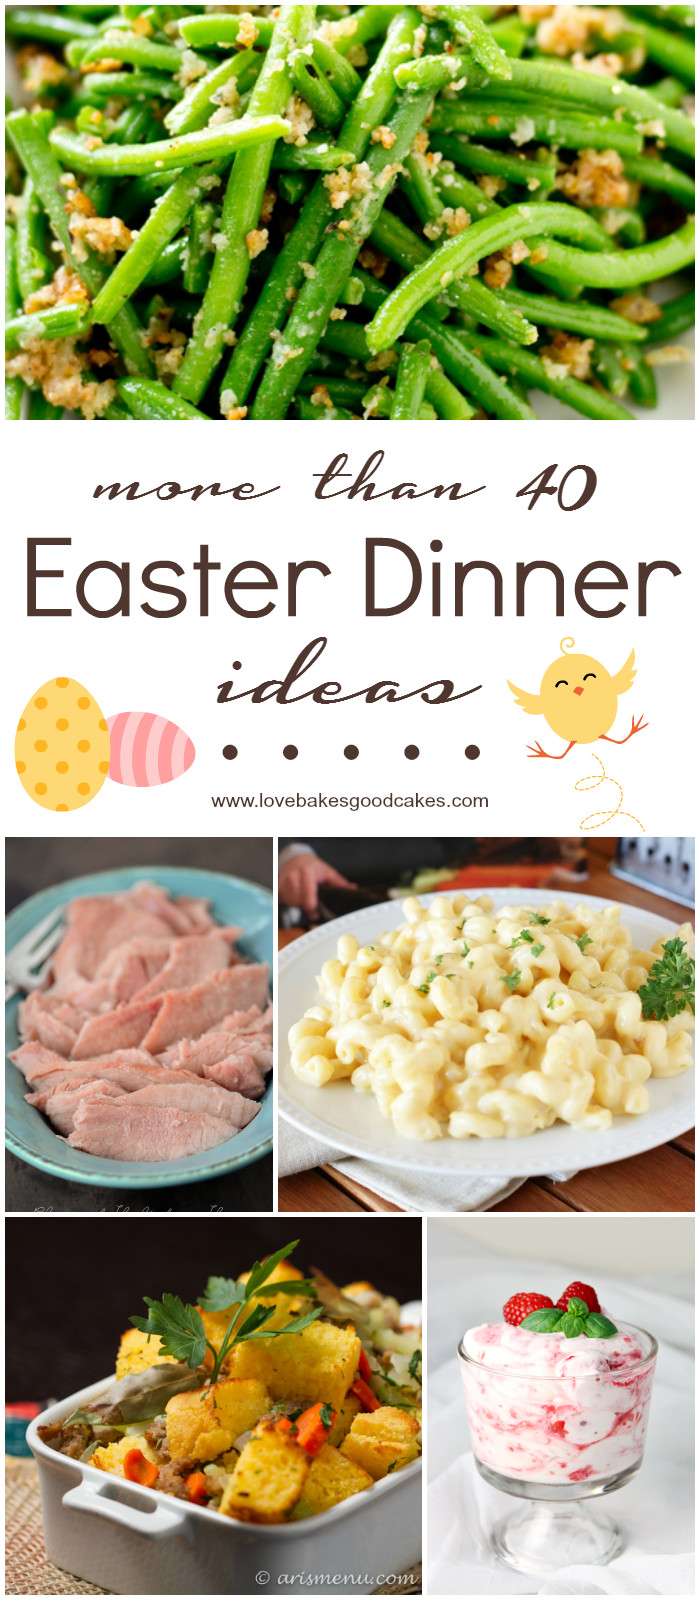 Best Easter Dinner Menu Ideas
 More than 40 Easter Dinner Ideas